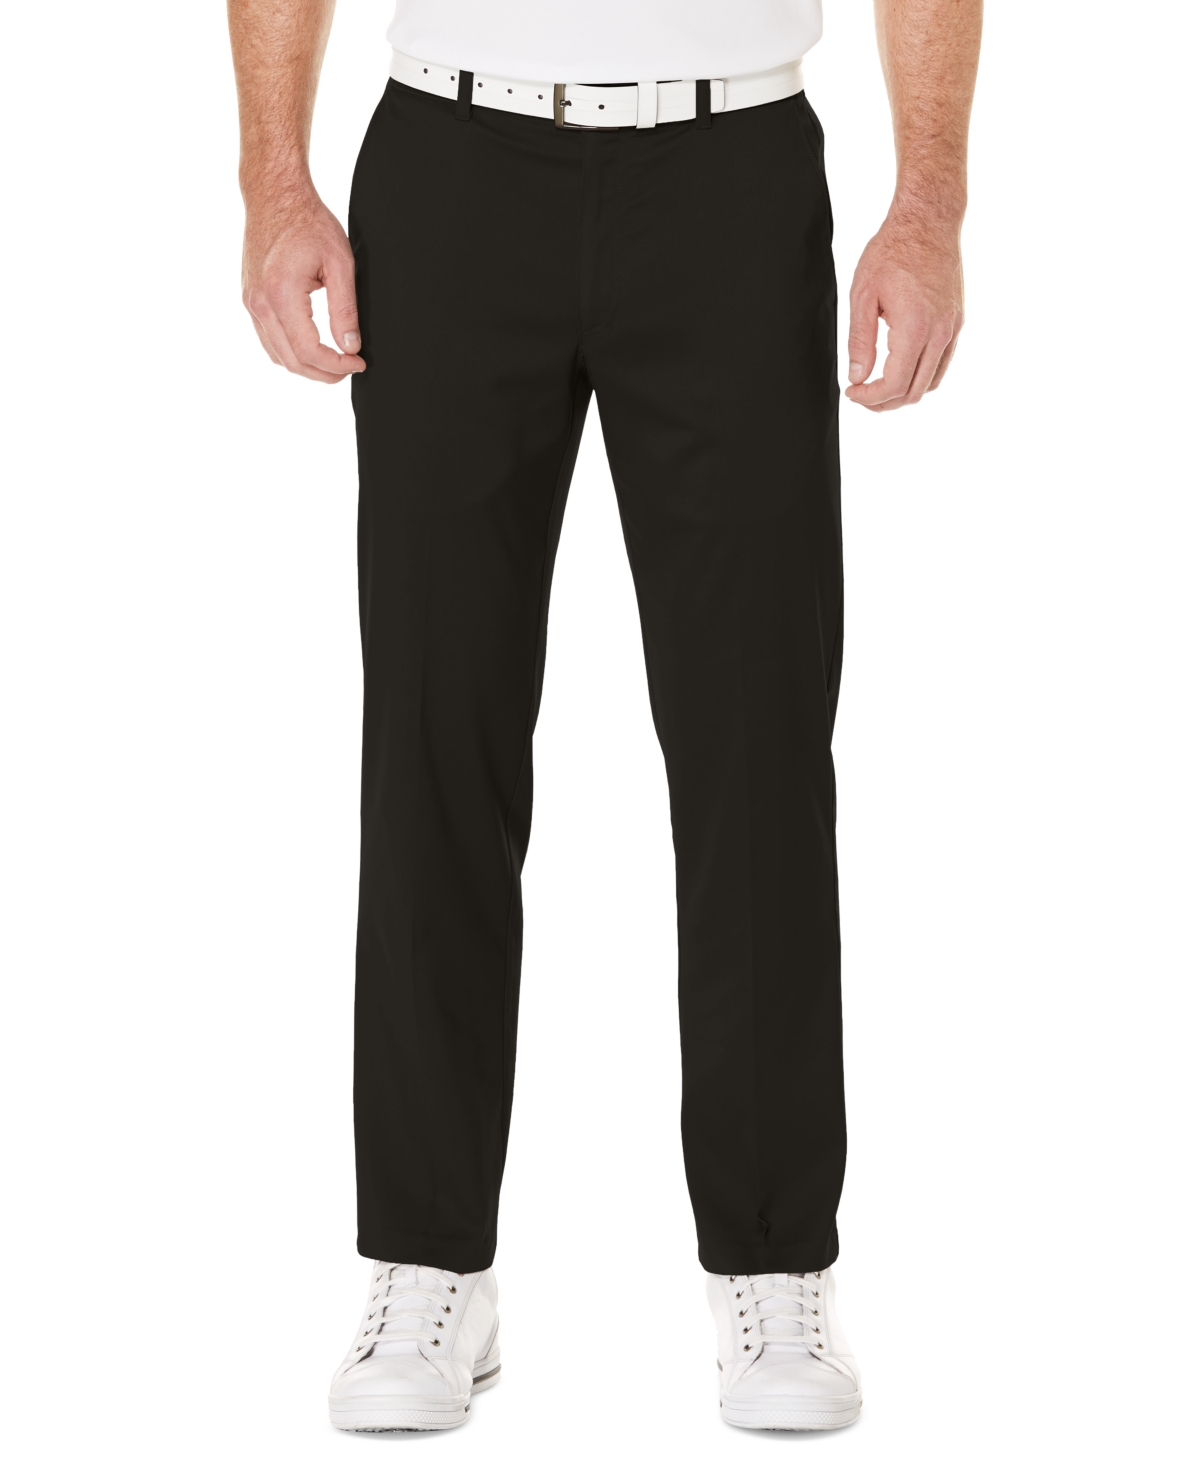 Men's Flat-Front Golf Pants - Navy